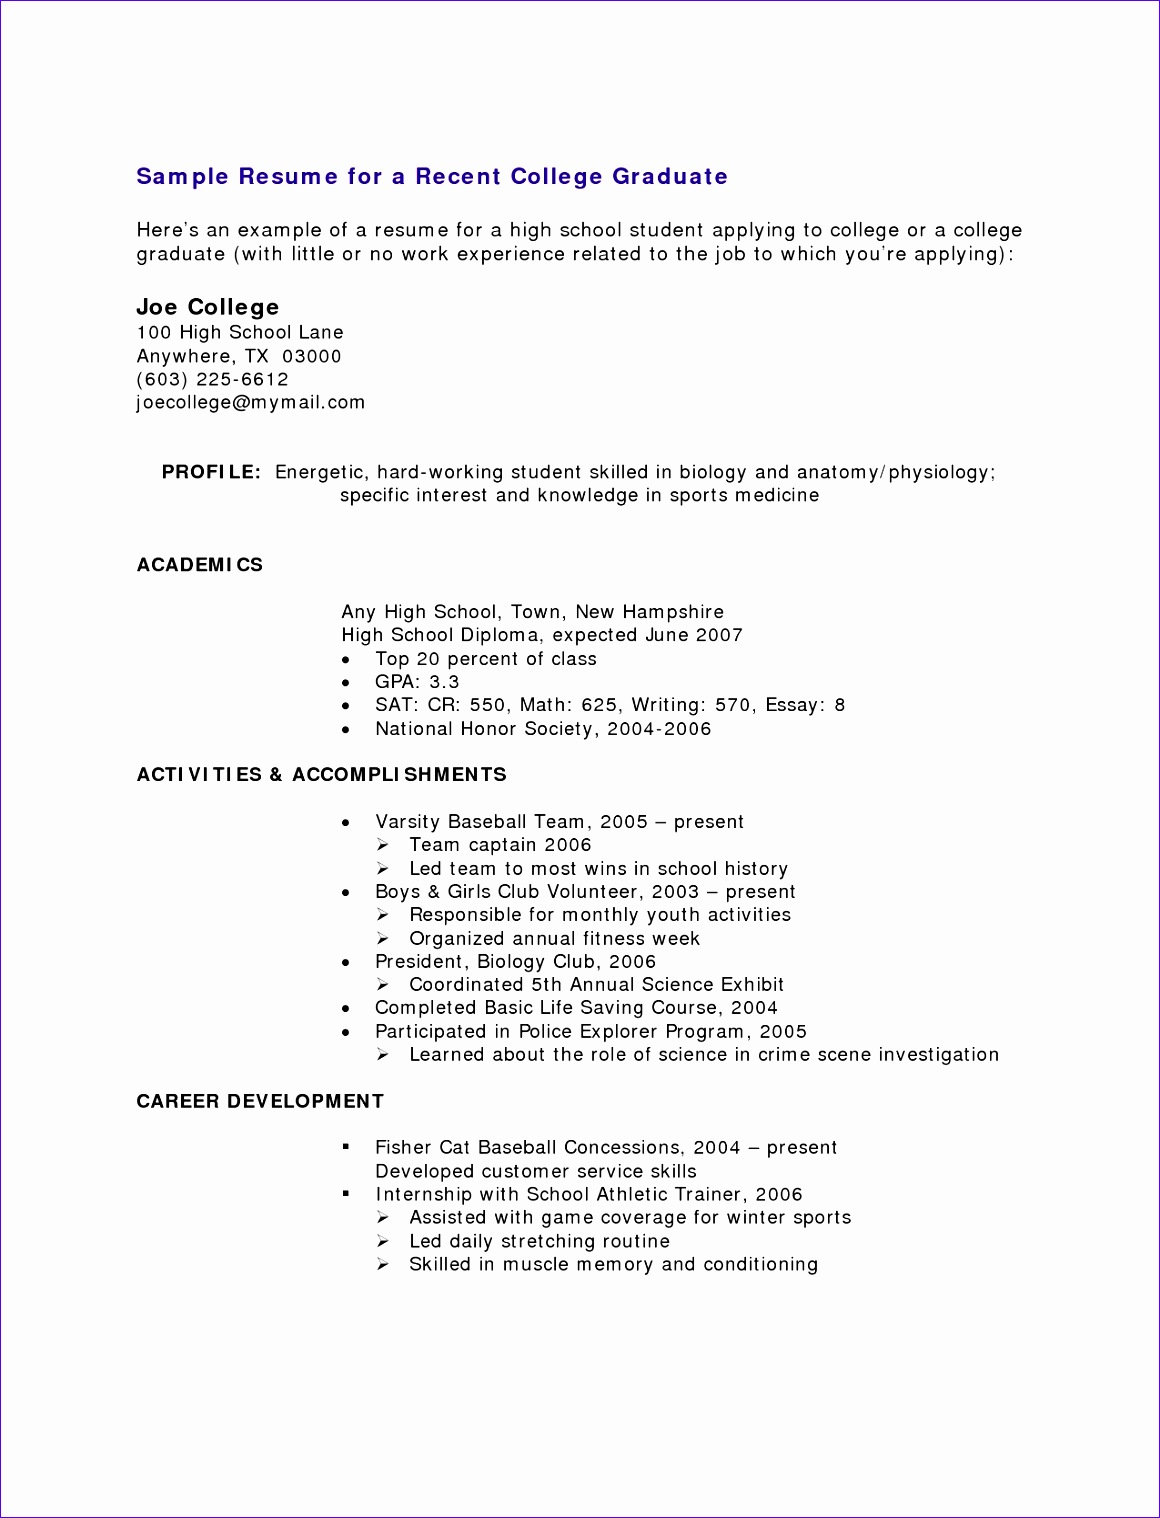 ms word resume resume format in word free resume template throughout microsoft word 2010 resume template